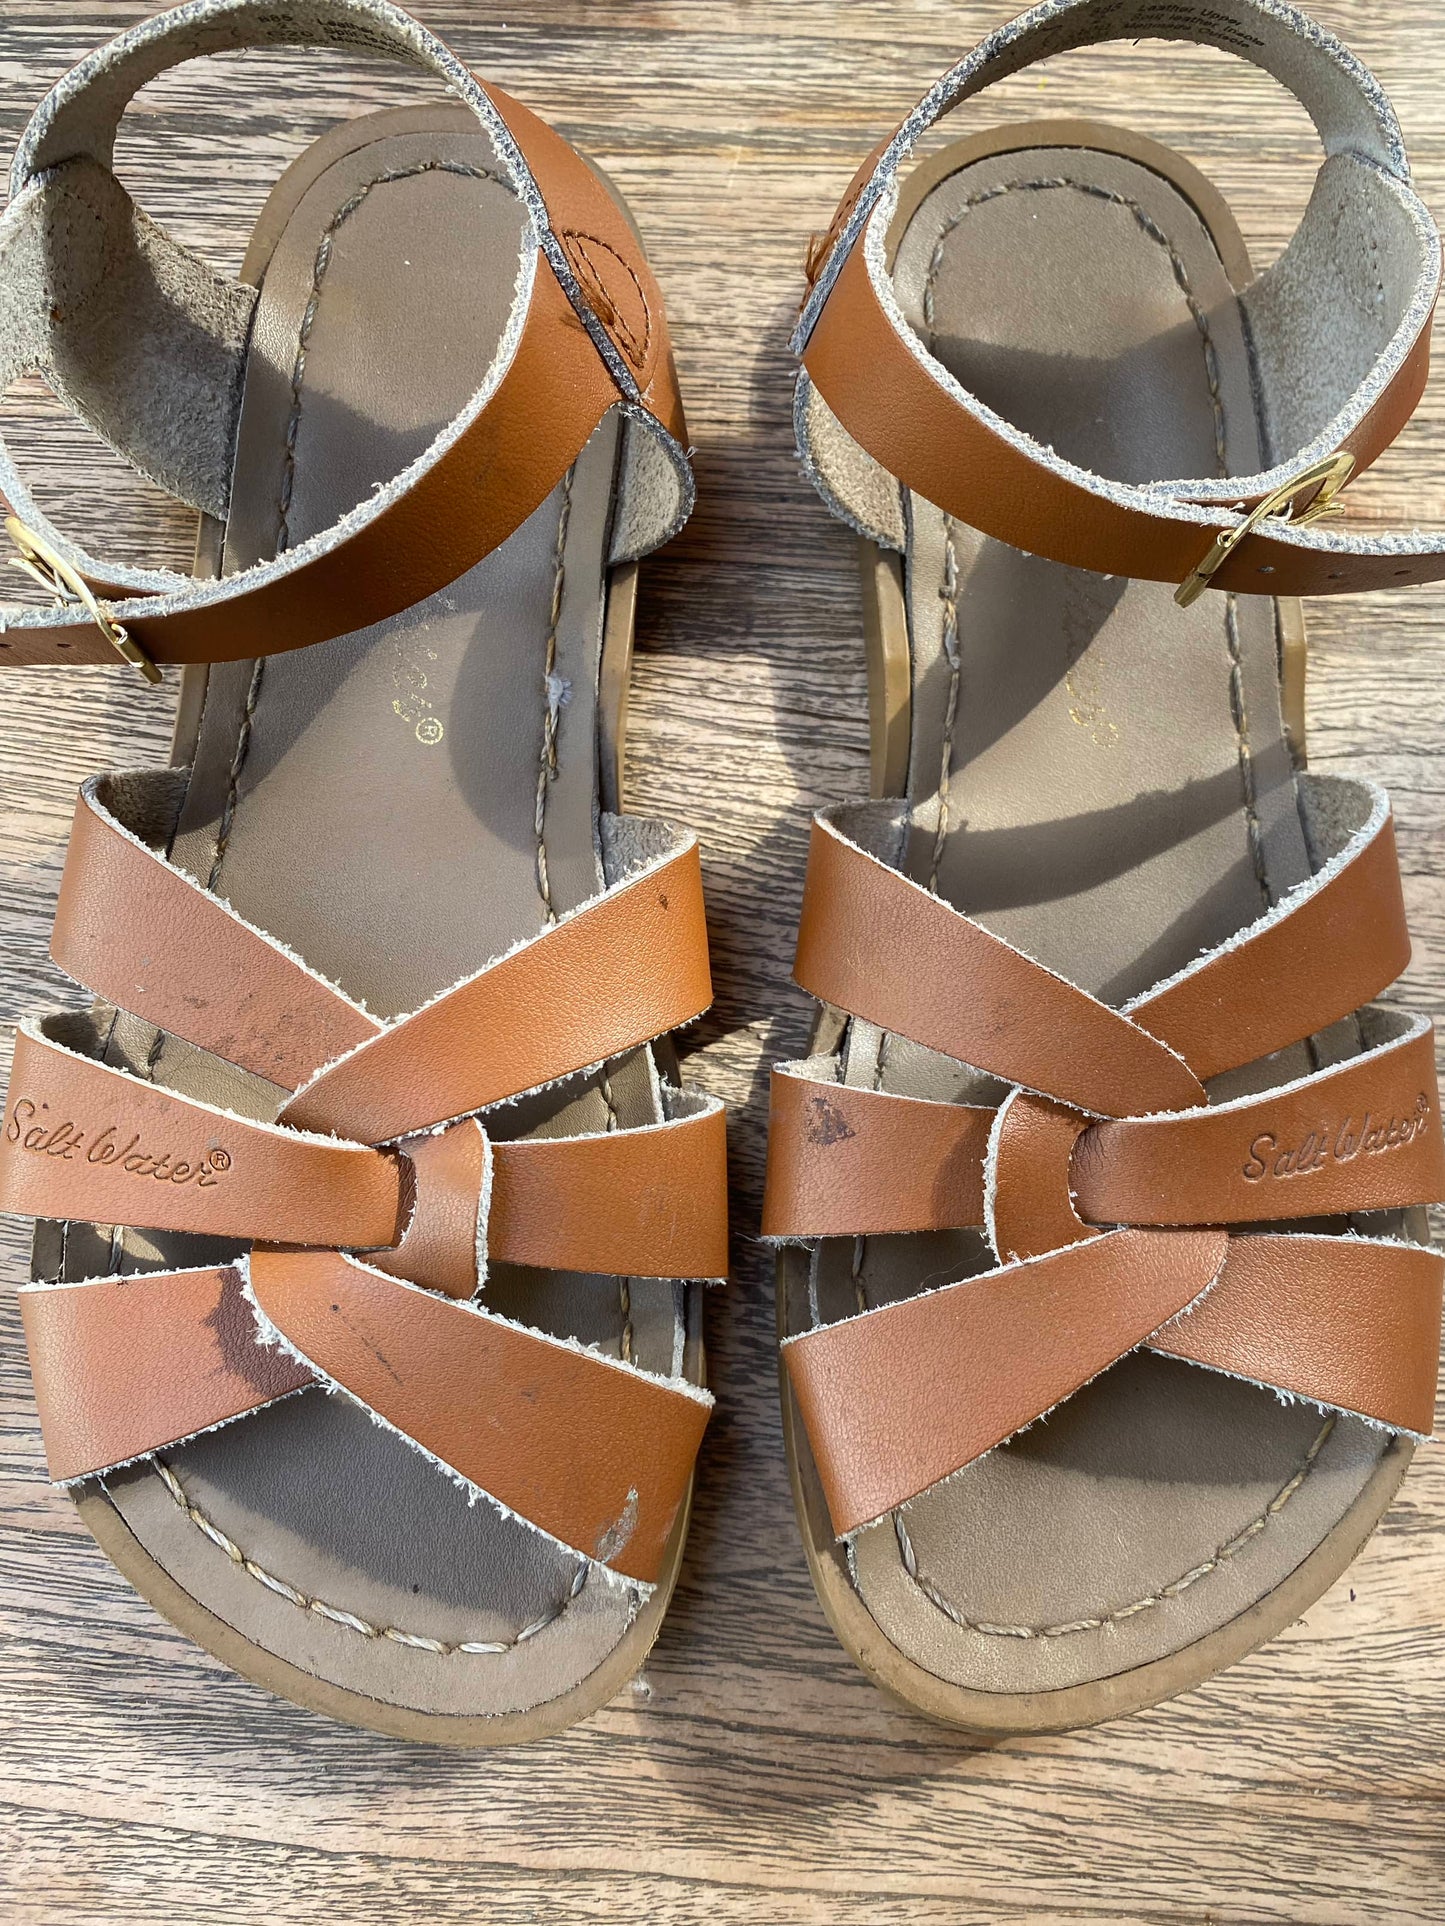 The Salt Water Sandal - Brown Sandals (Pre-Loved) Size 2